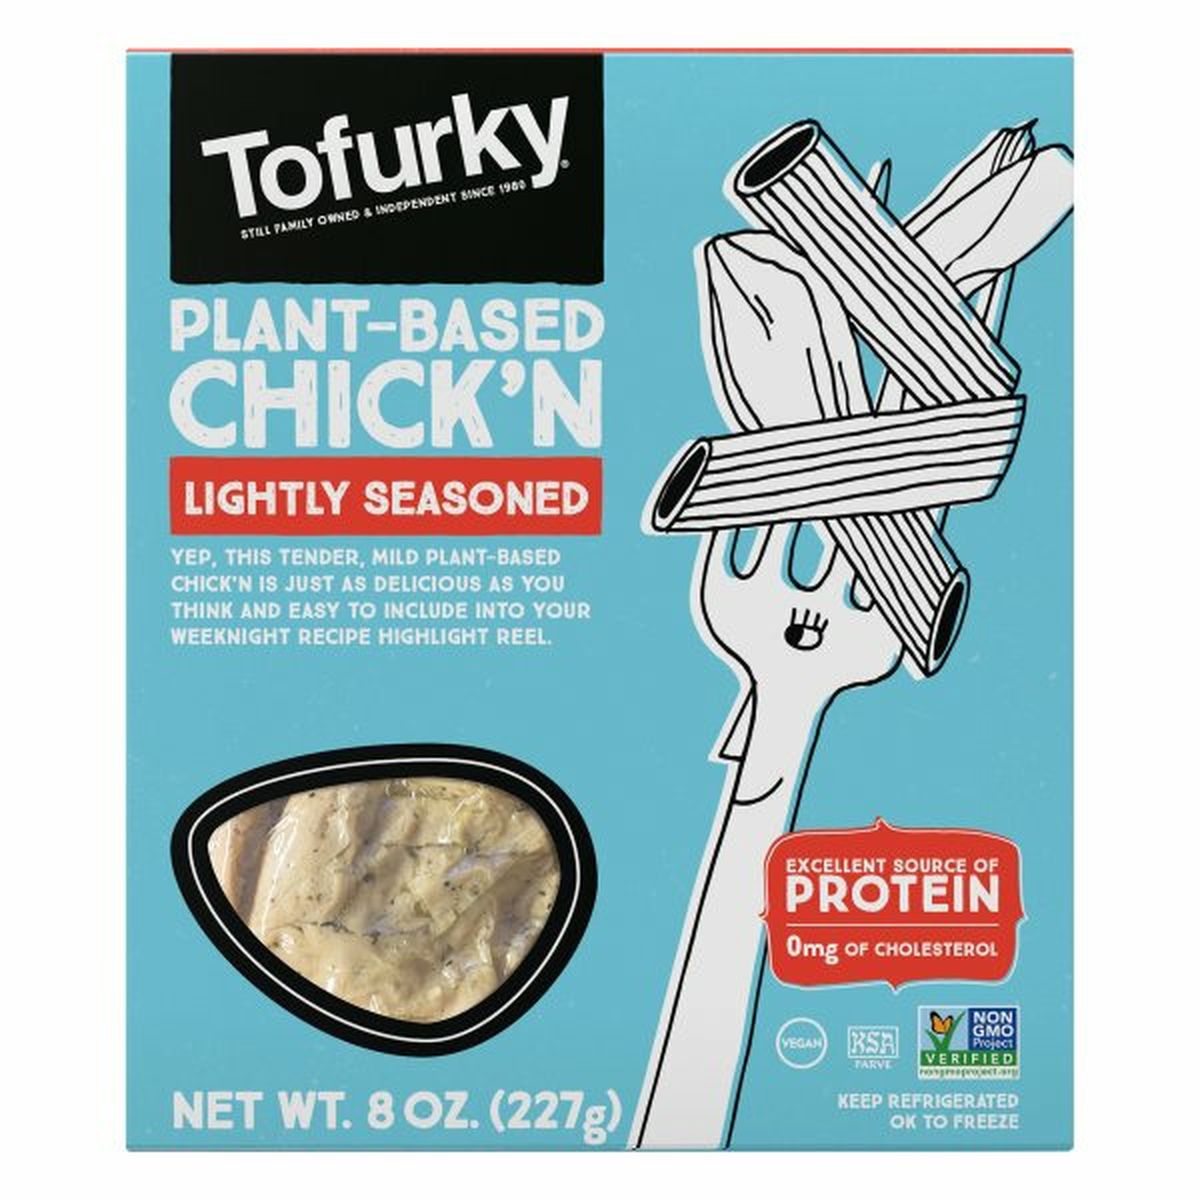 Calories in Tofurky Chick'n, Plant-Based, Lightly Seasoned